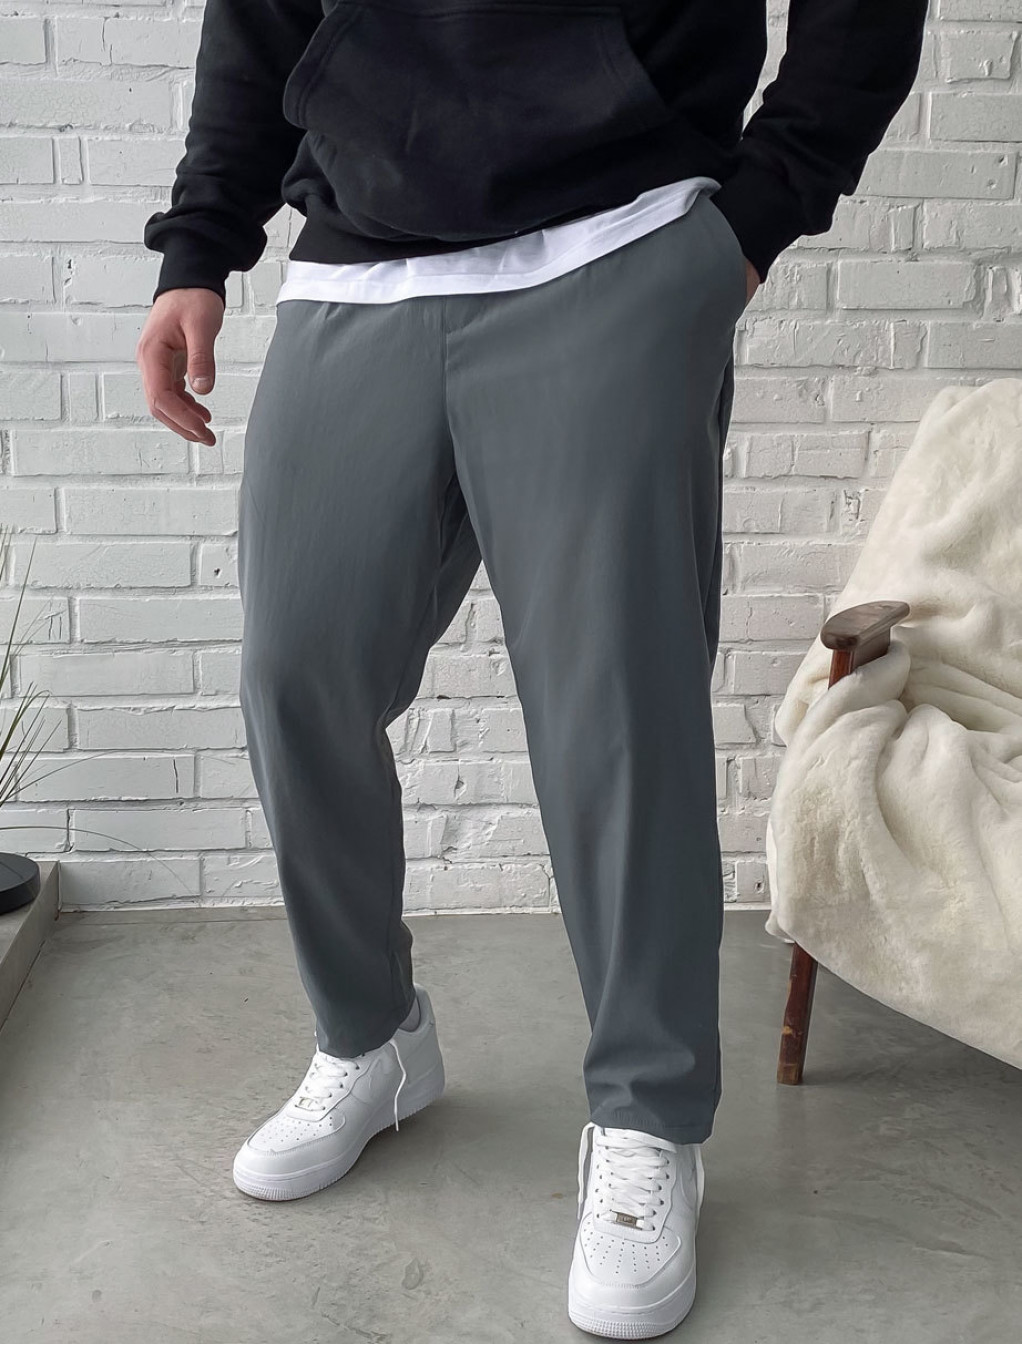 Spodnie Staff gr gray